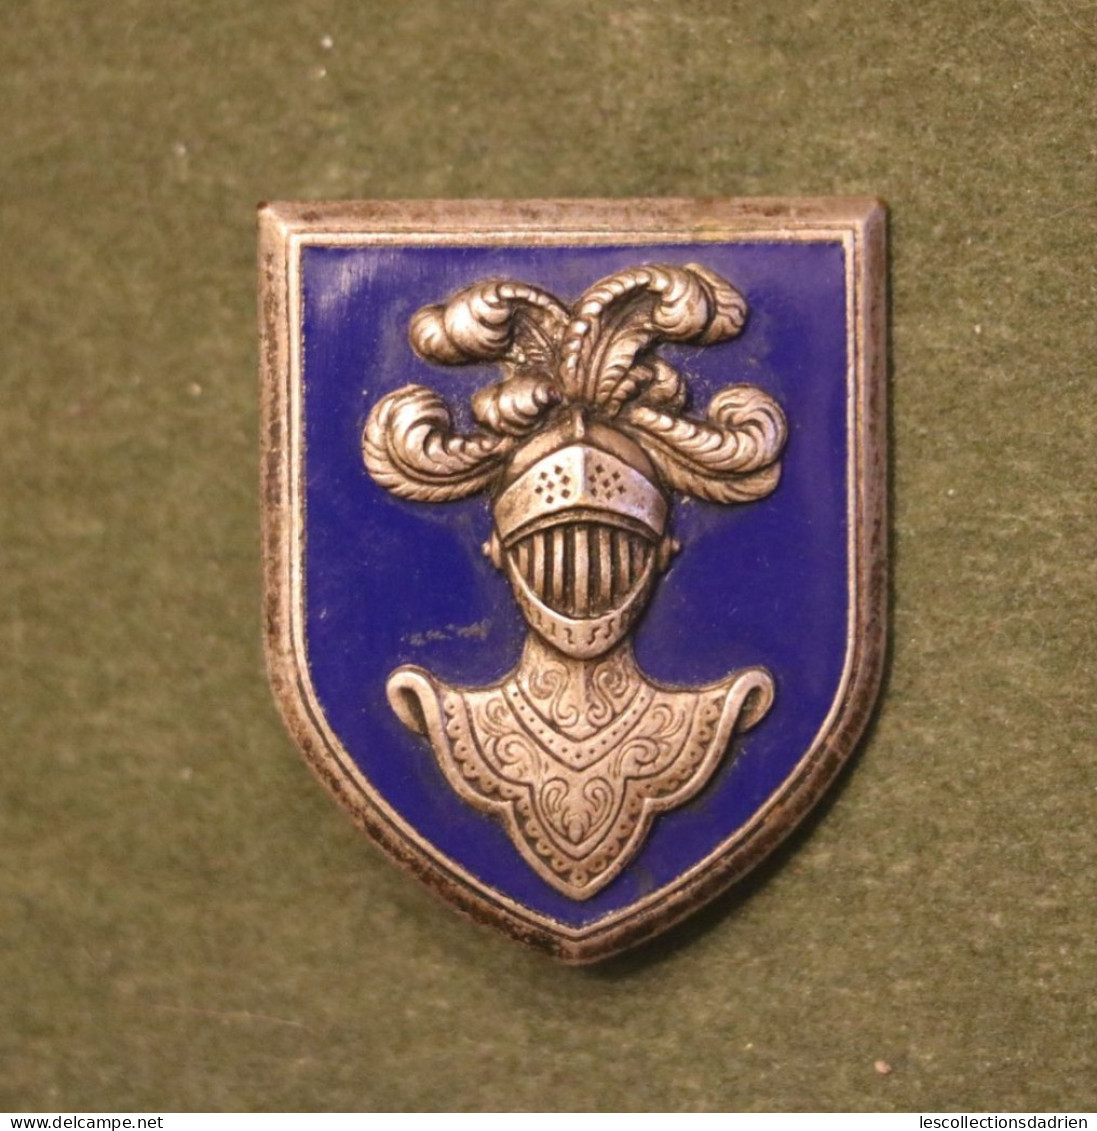 Insigne Arme Blindée - Cavalerie - Cavalry - Army